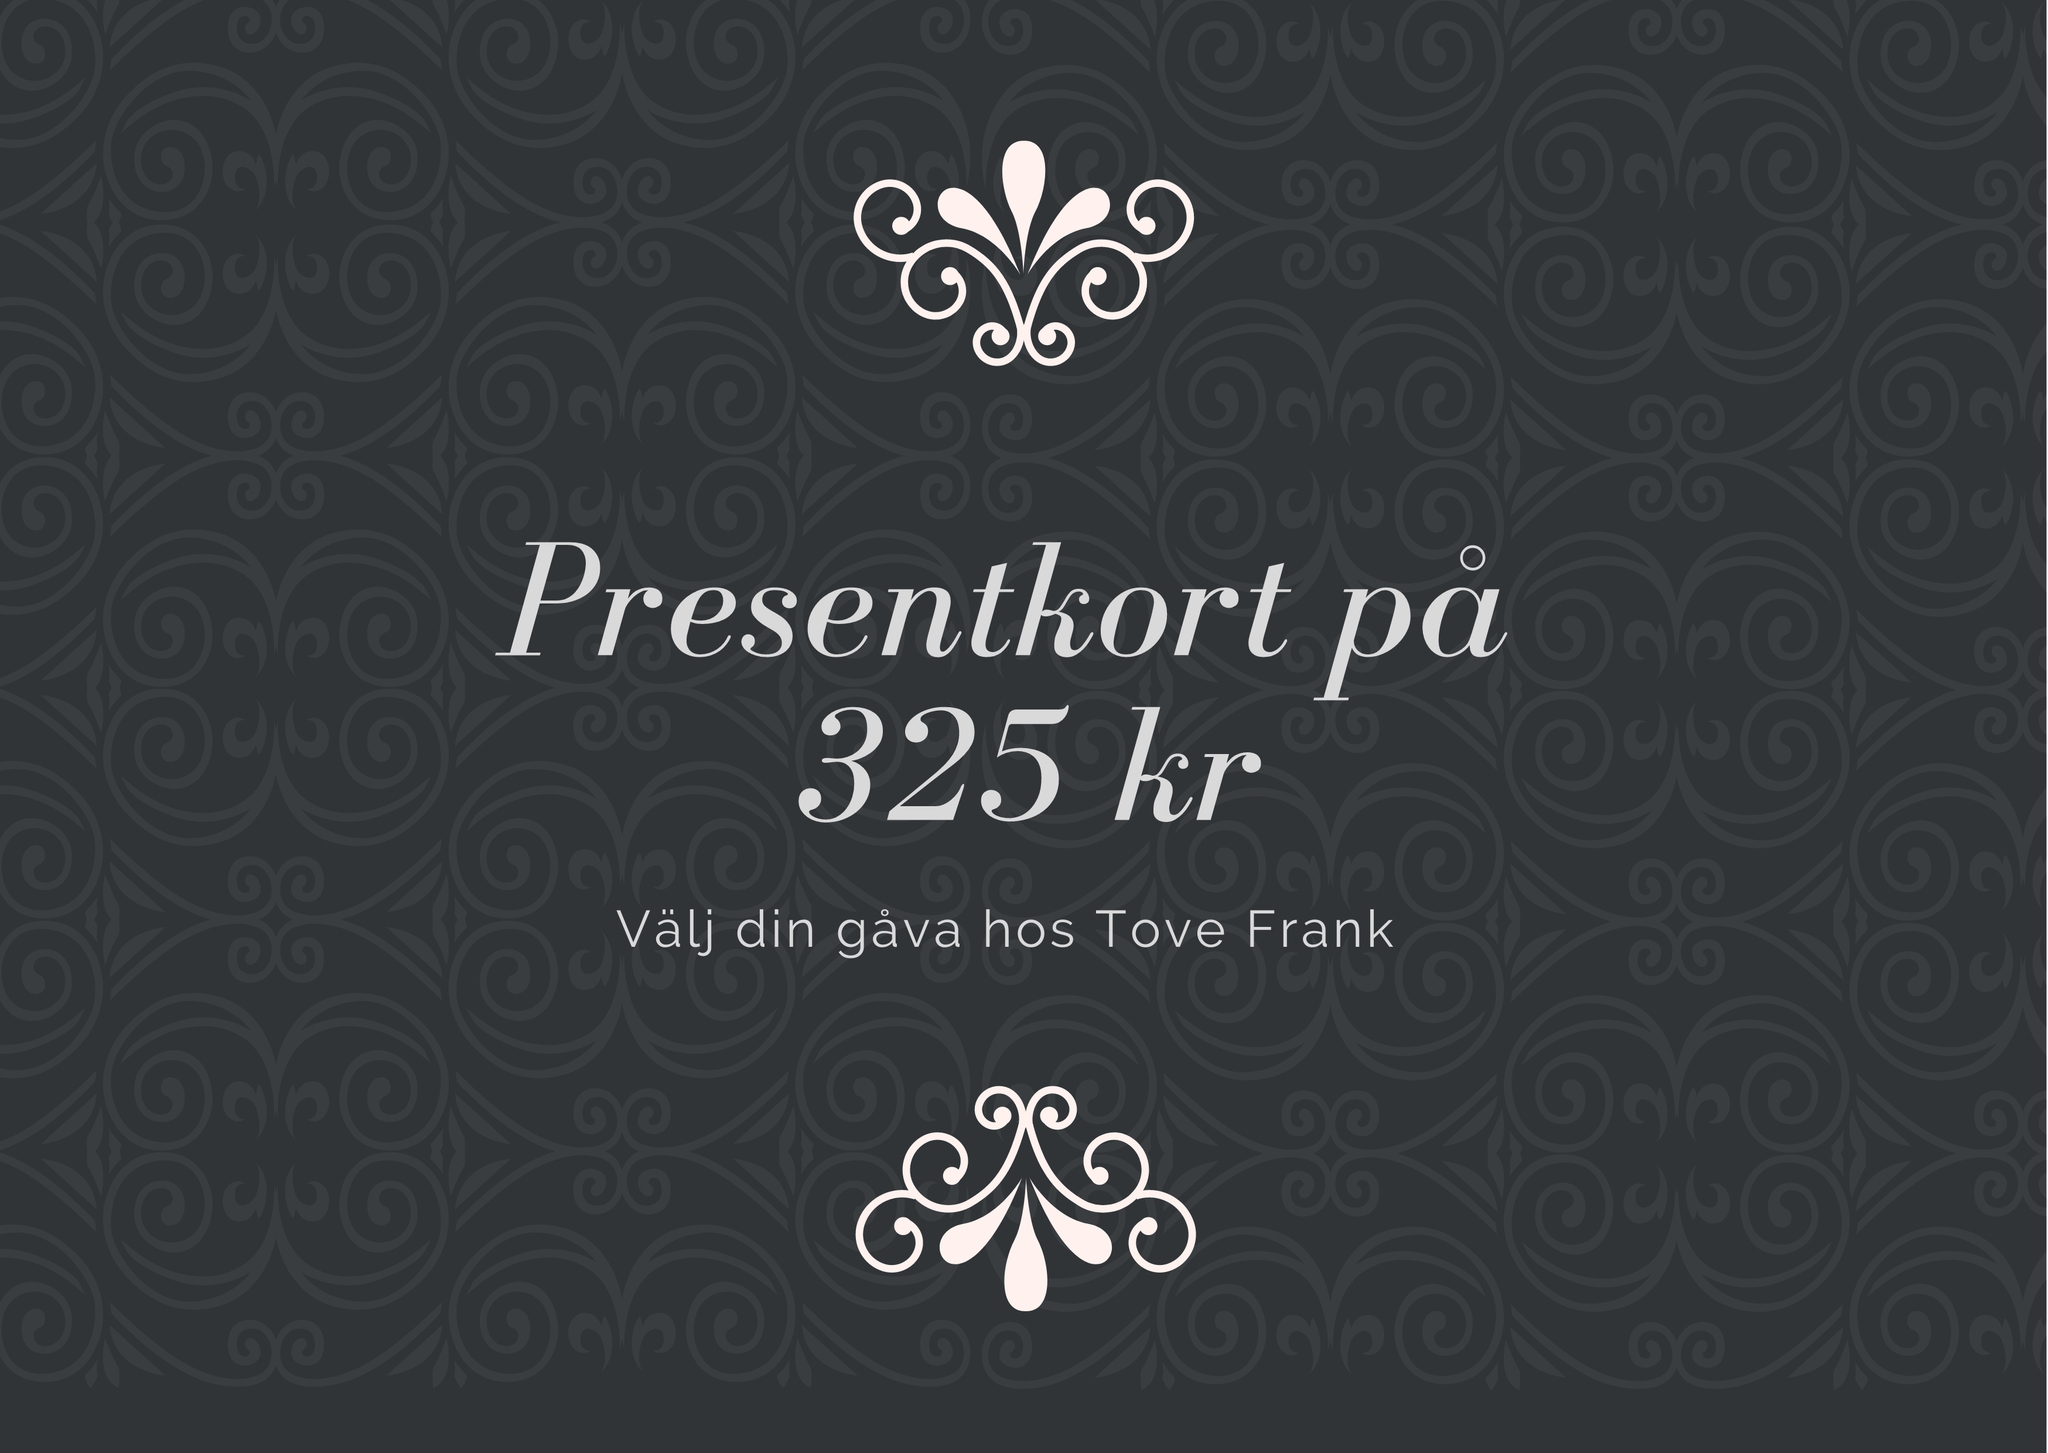 Presentkort 325 kronor